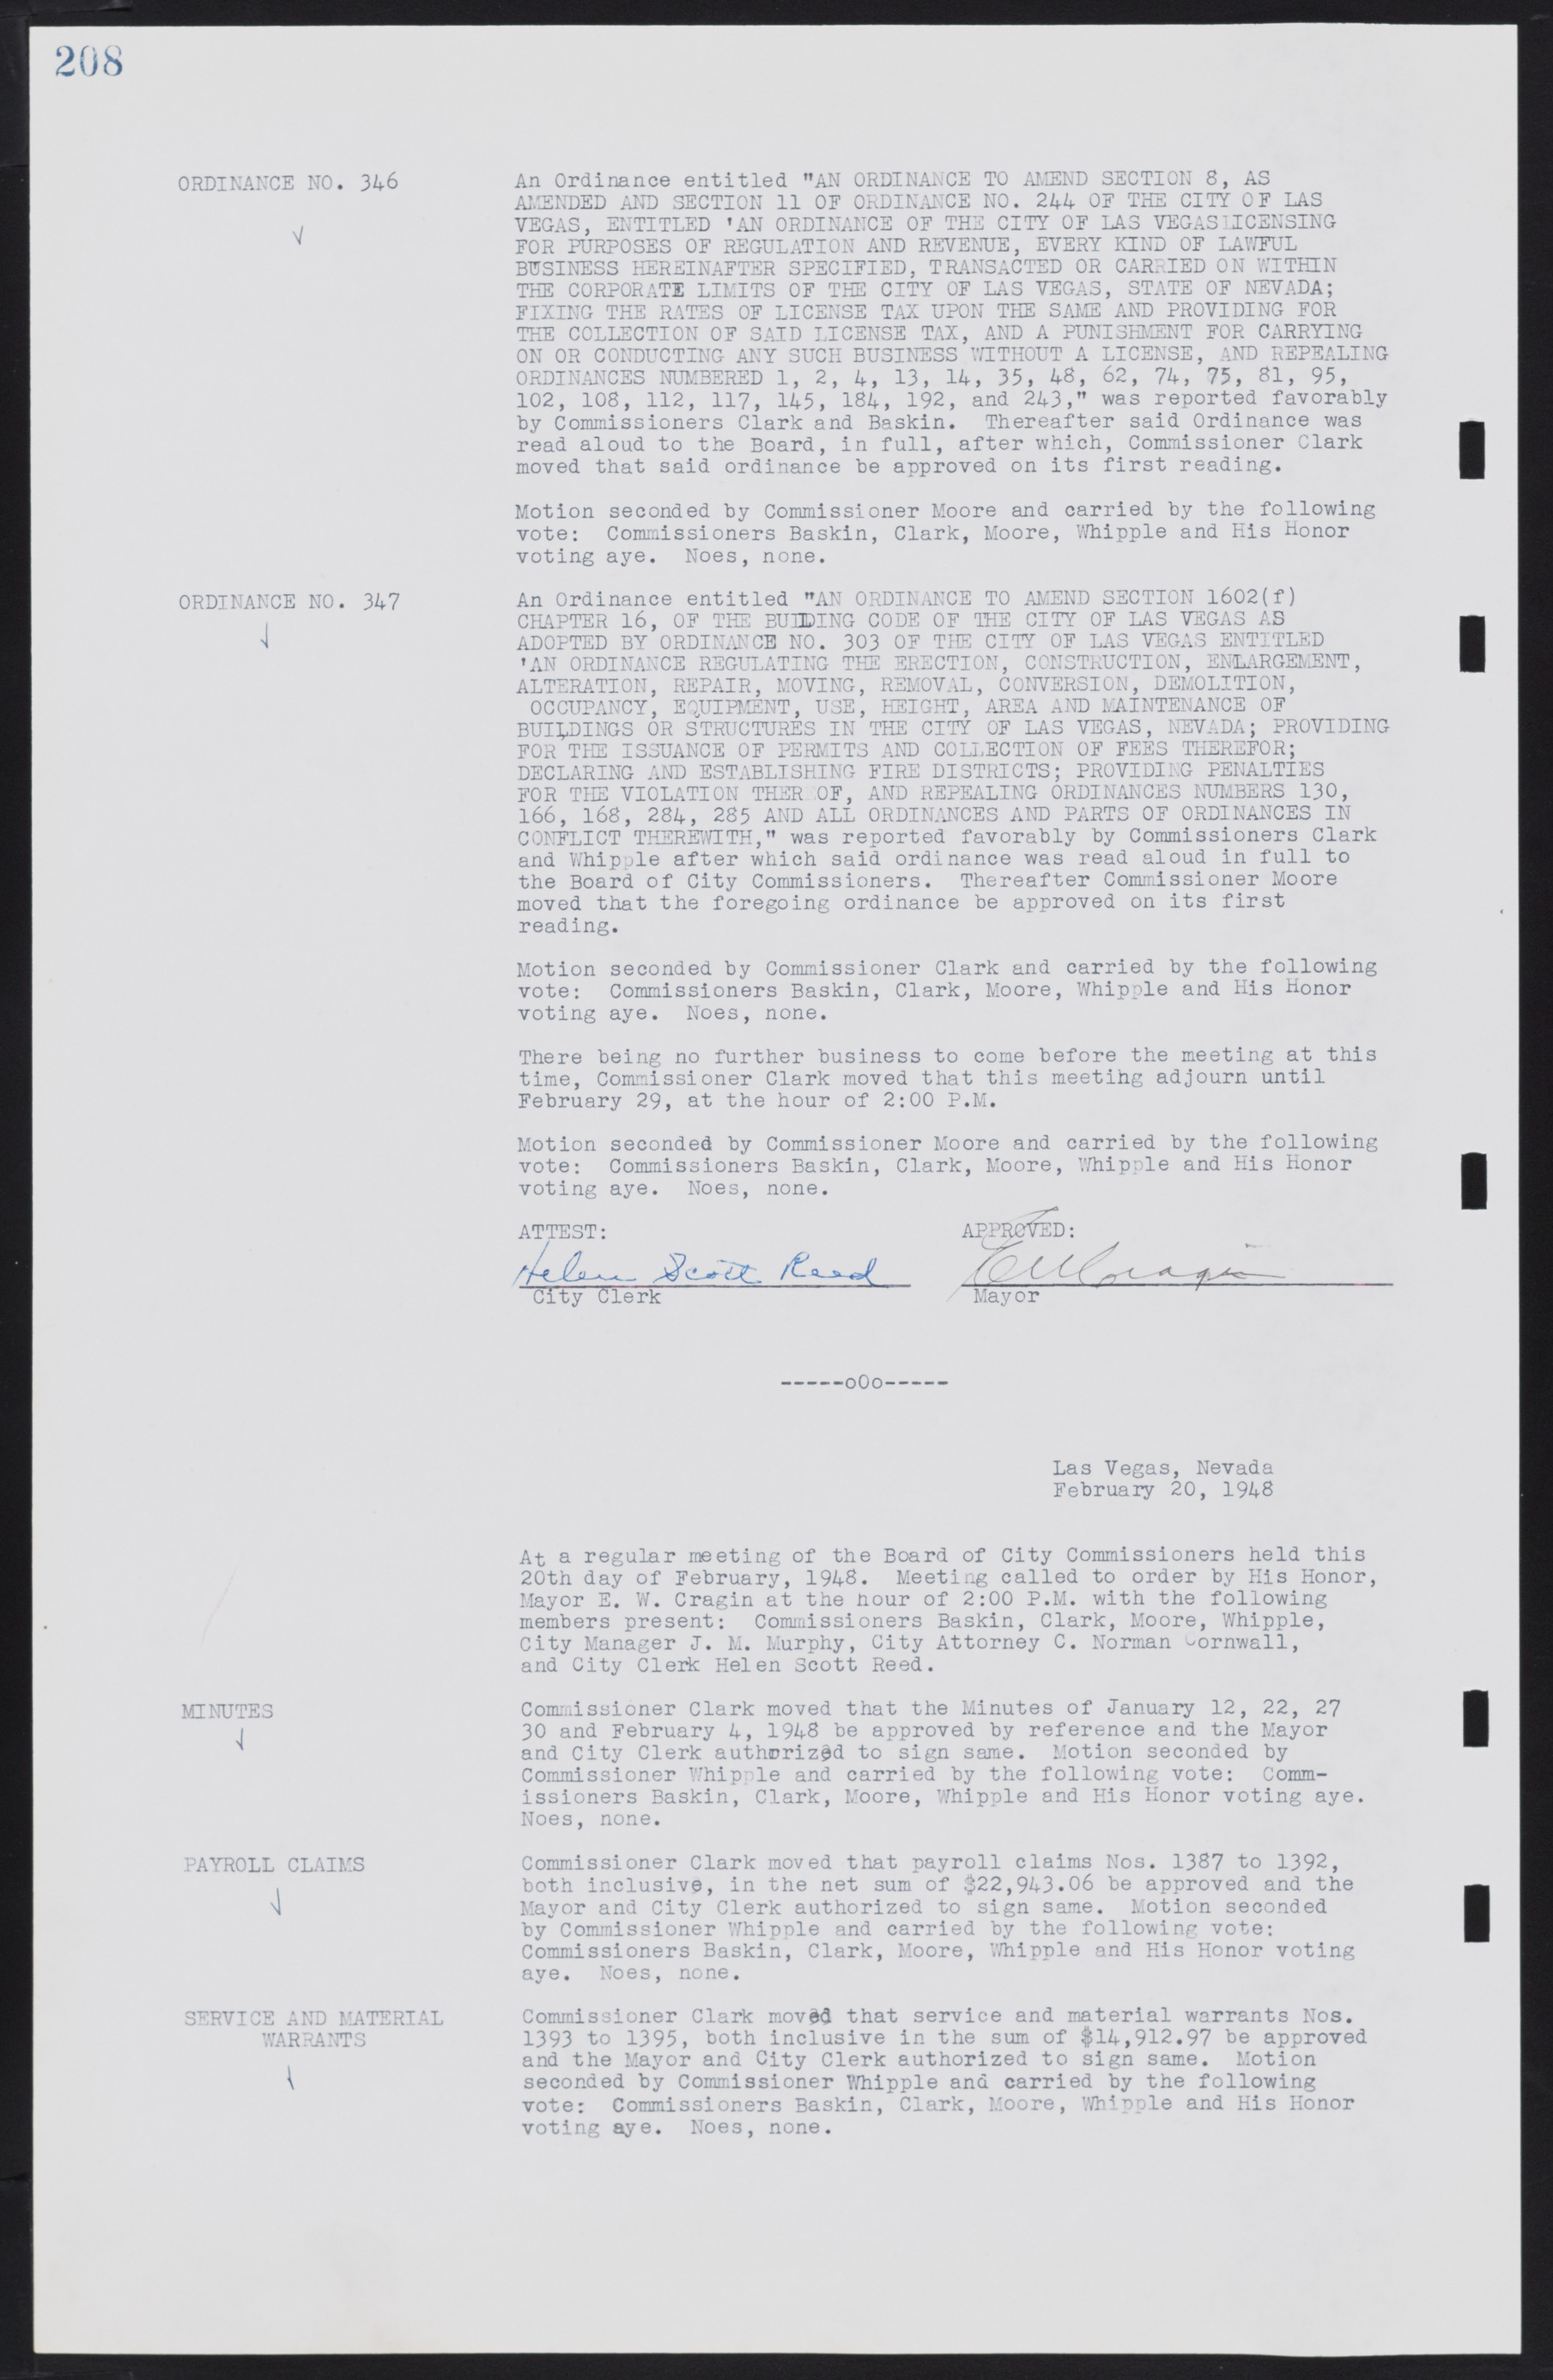 Las Vegas City Commission Minutes, January 7, 1947 to October 26, 1949, lvc000006-230